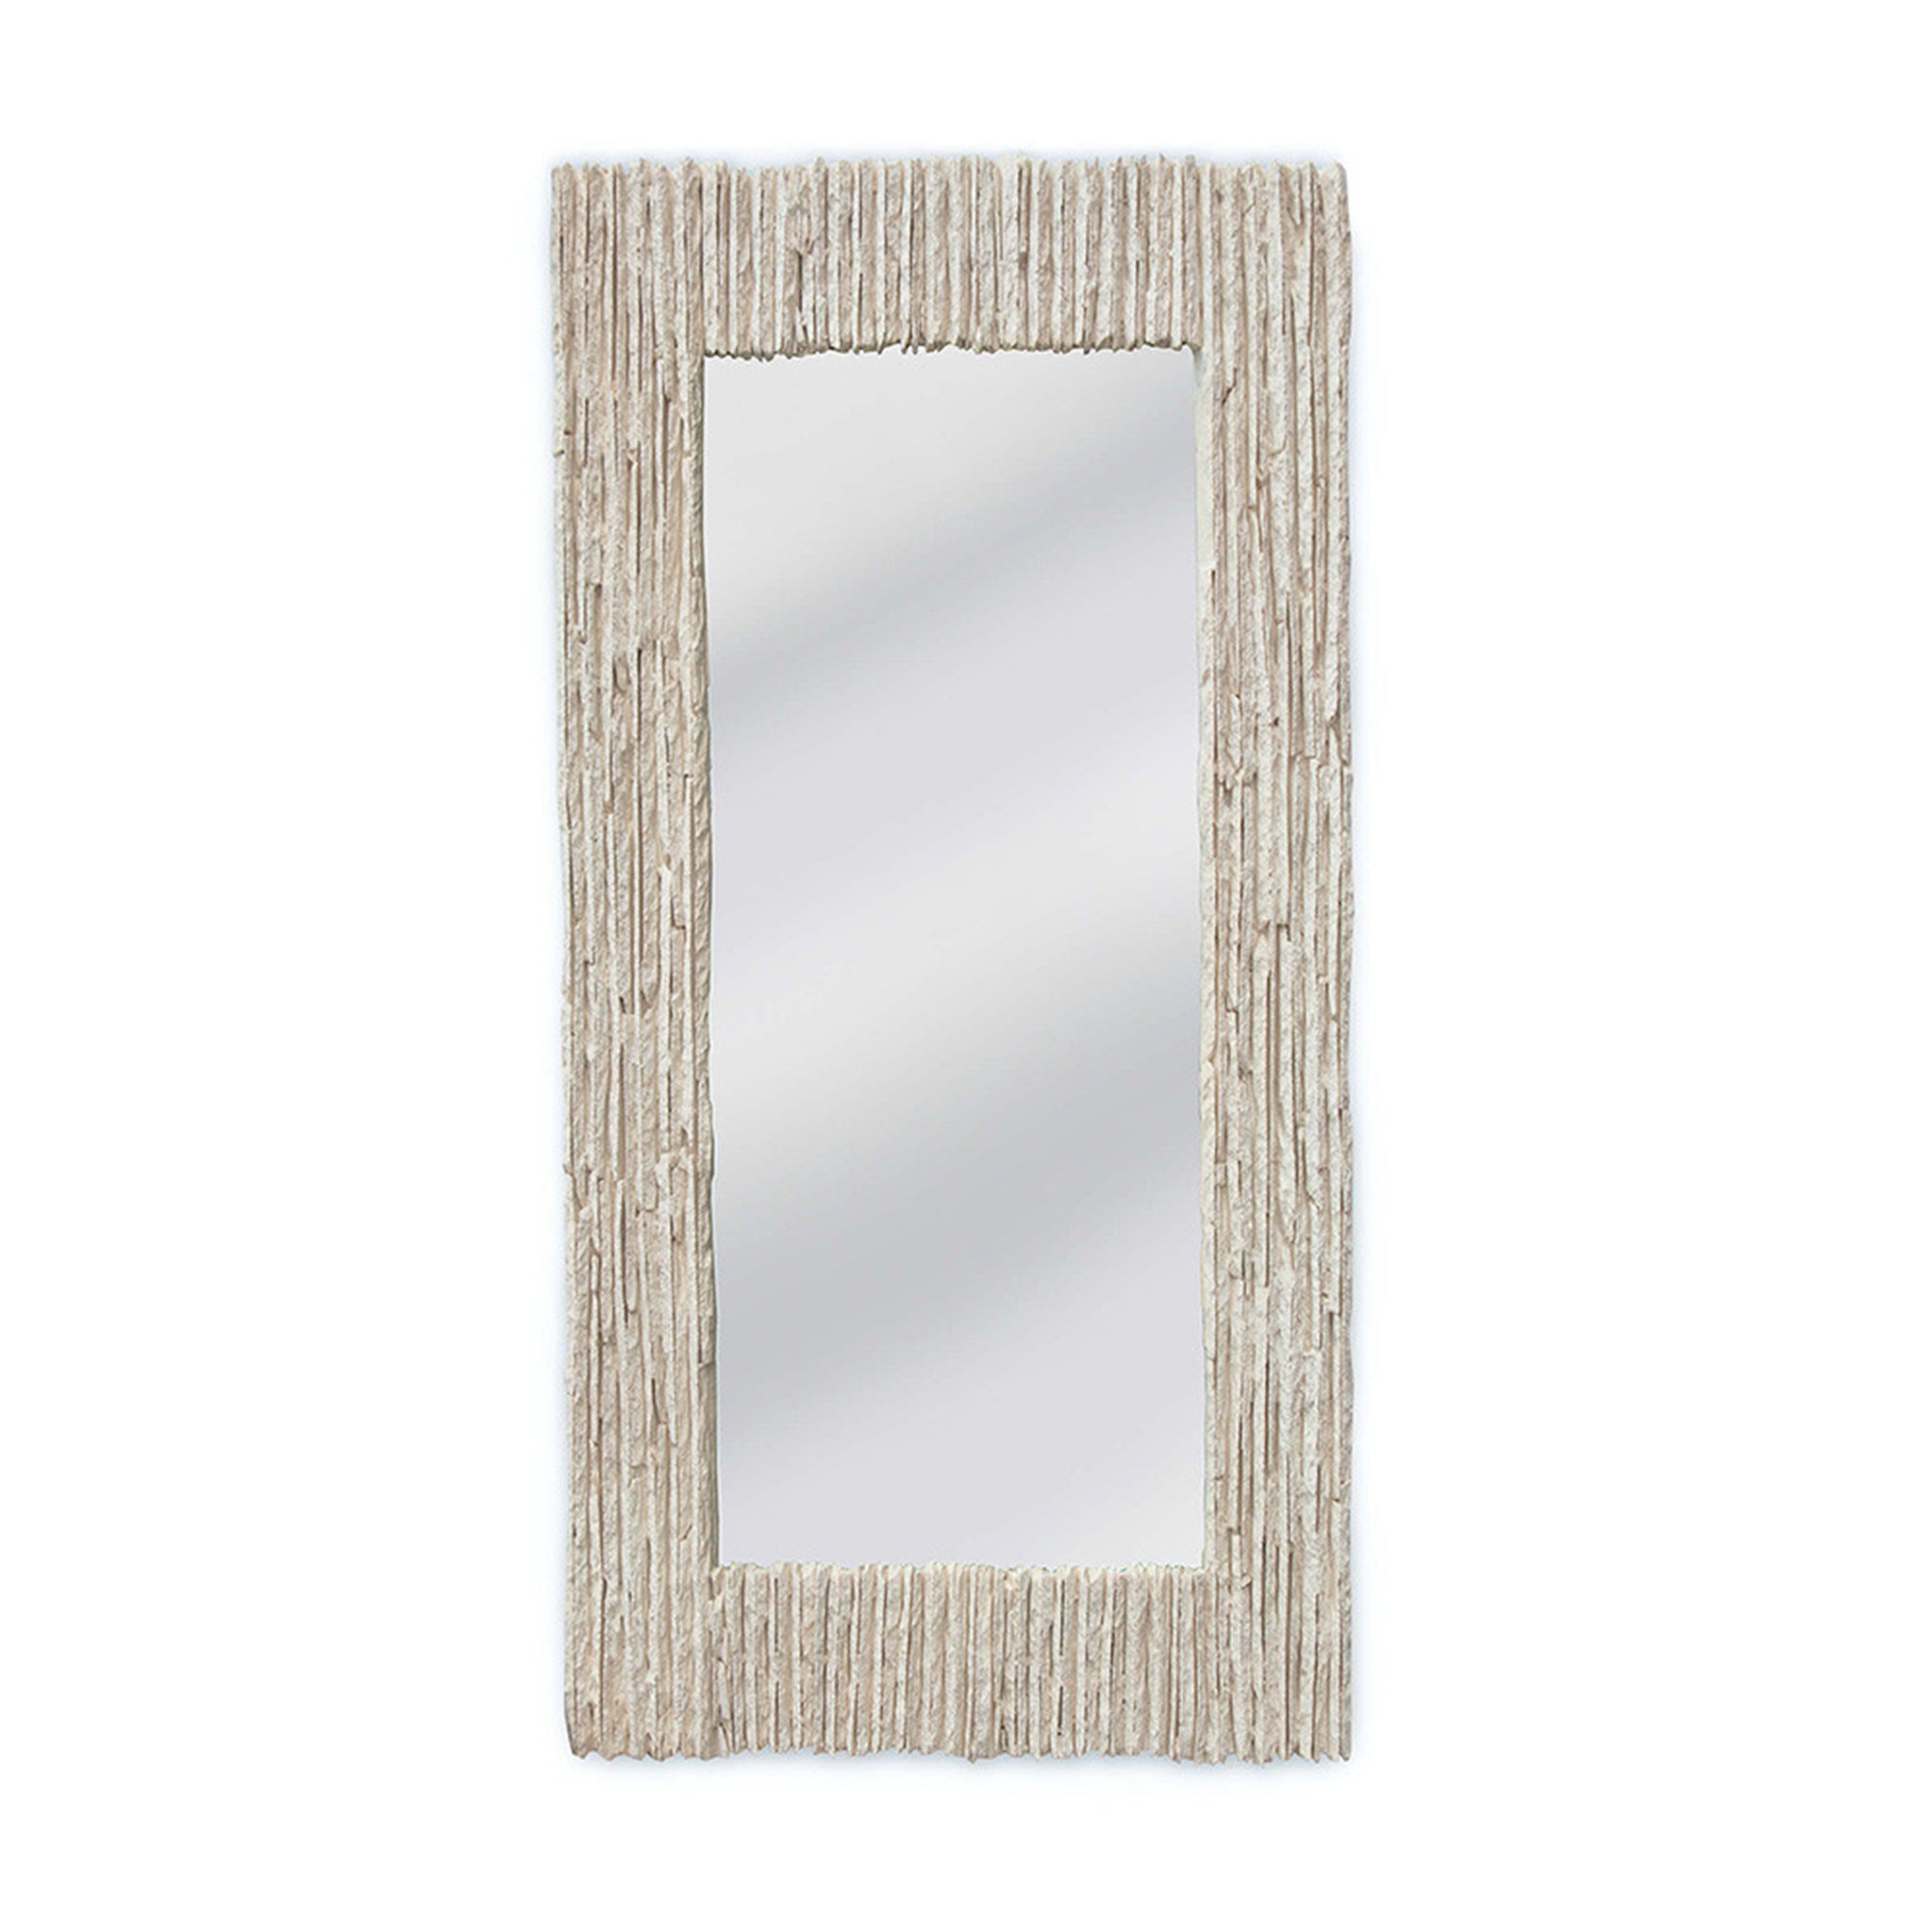 regina andrew slate mirror rectangle natural mirrors 